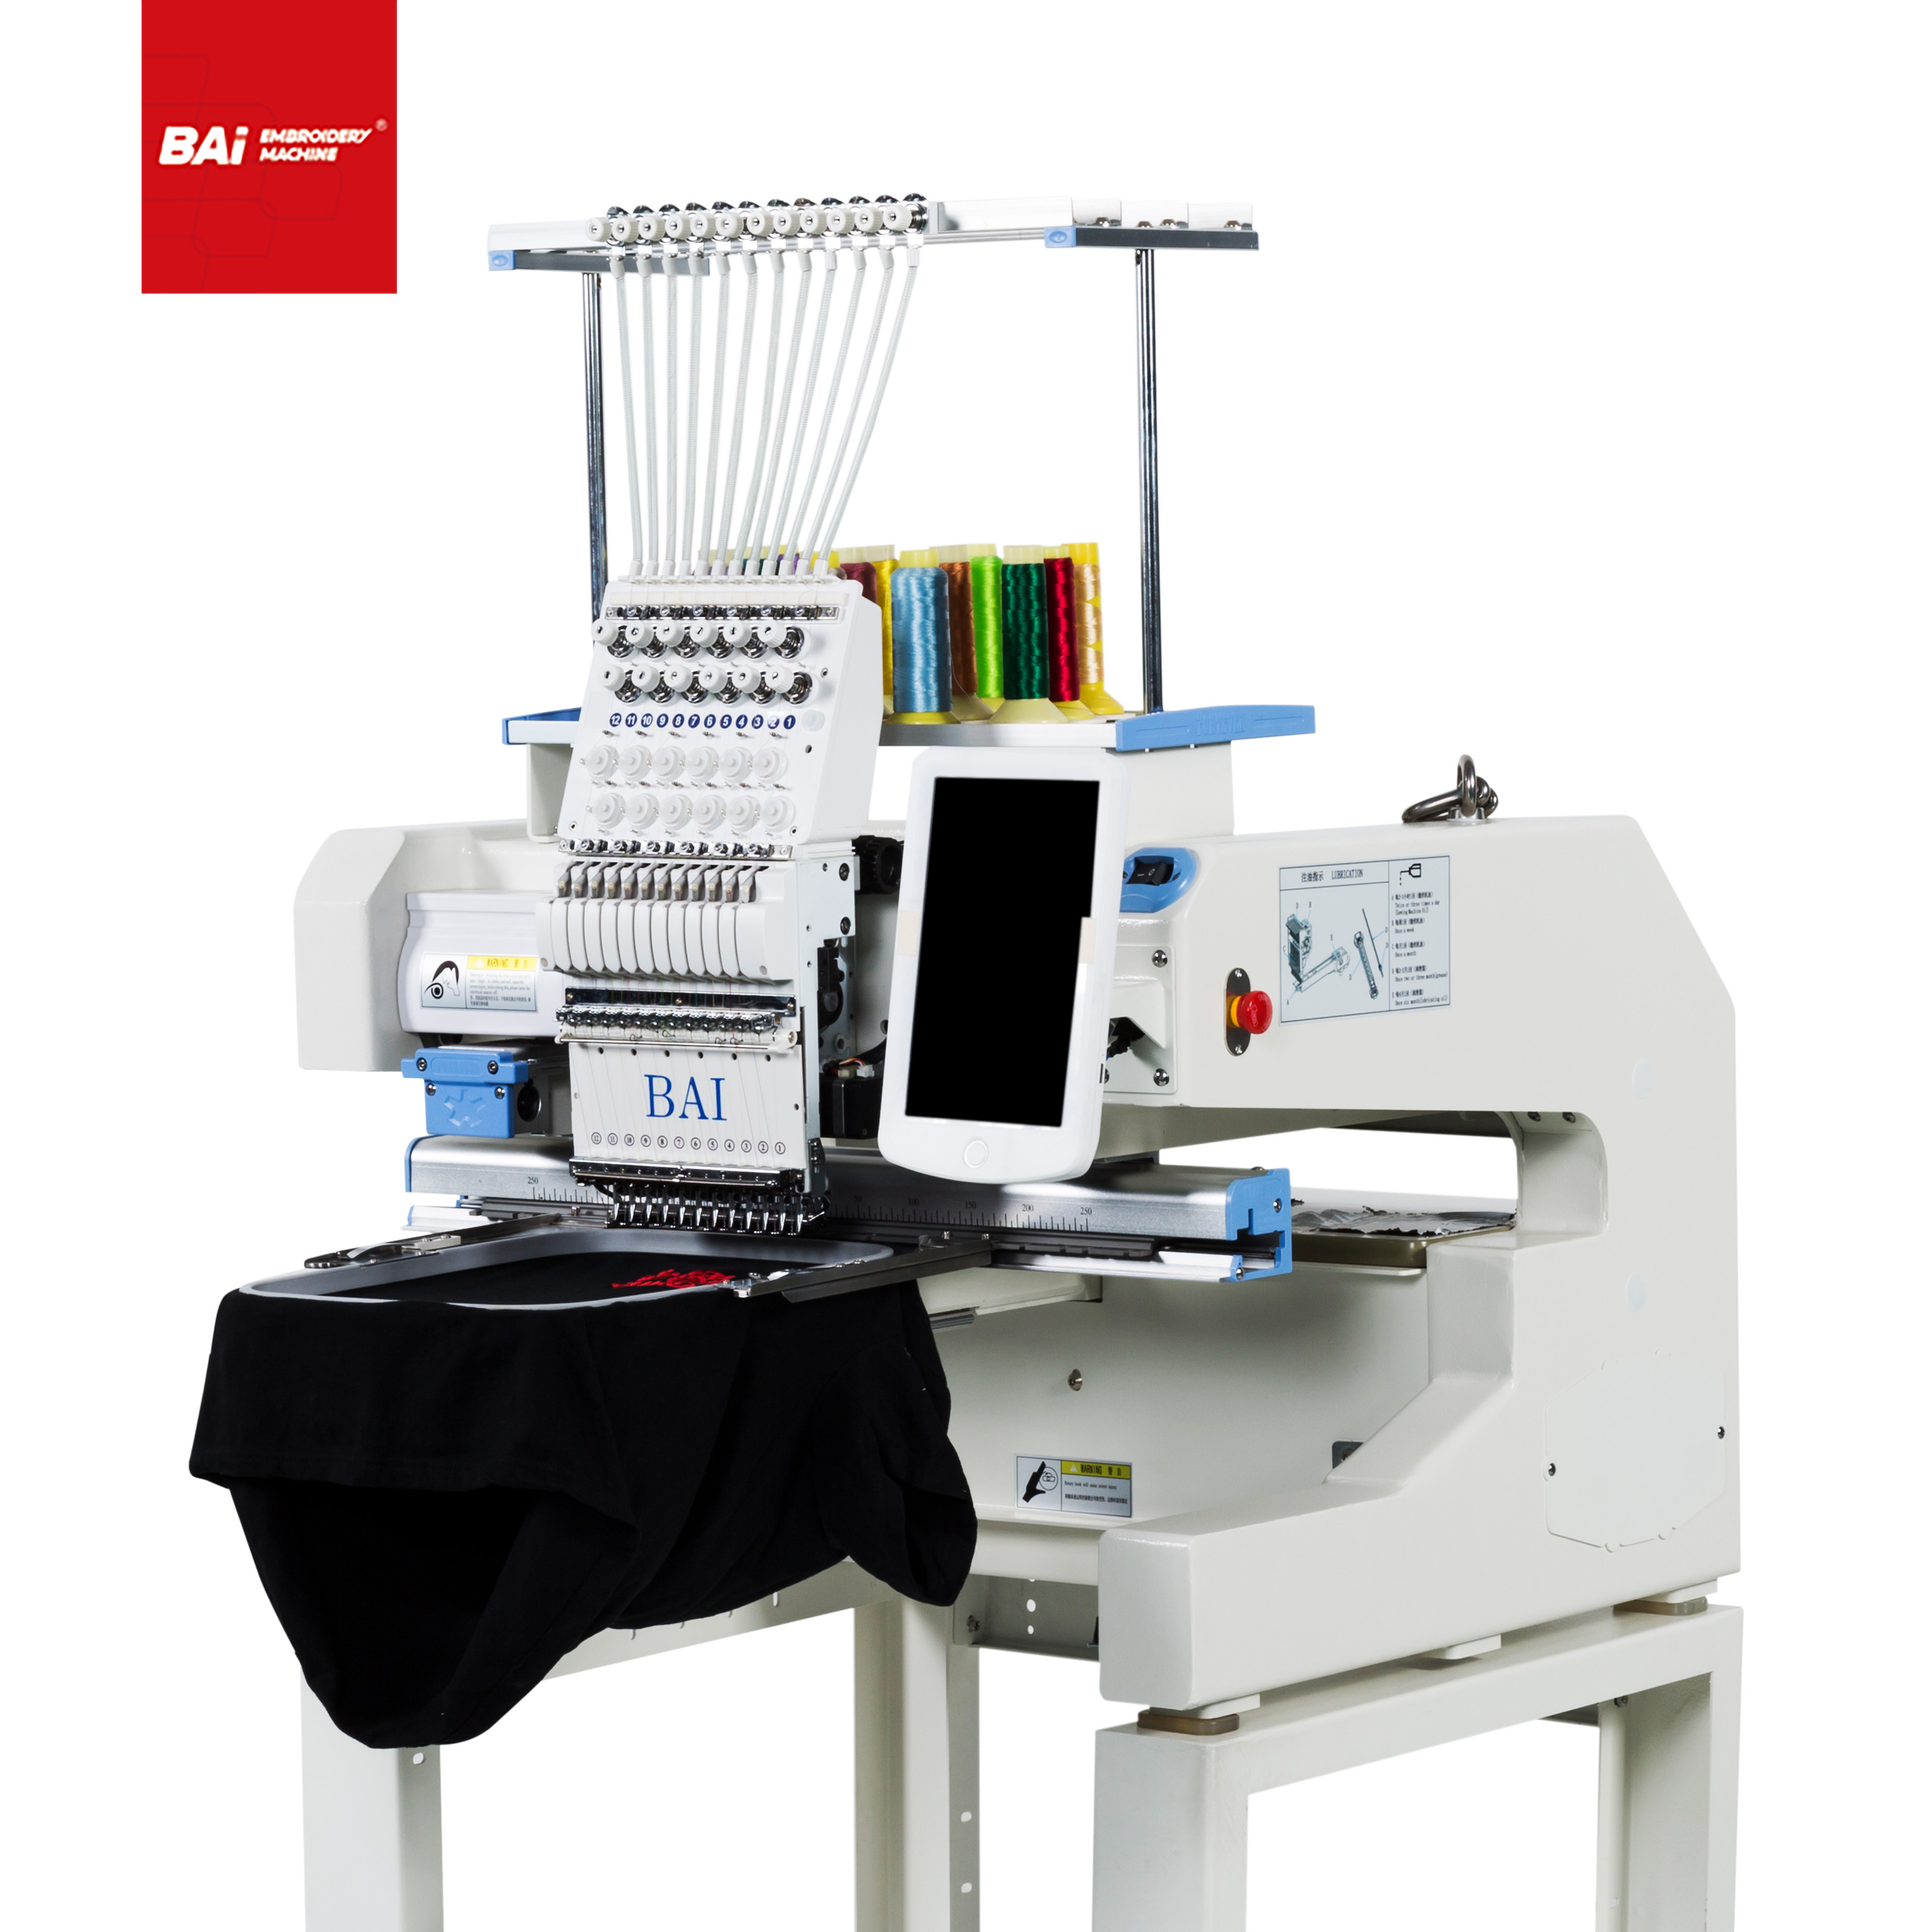 BAI Dahao Software Computer T-shirt Embroidery Machine for Household